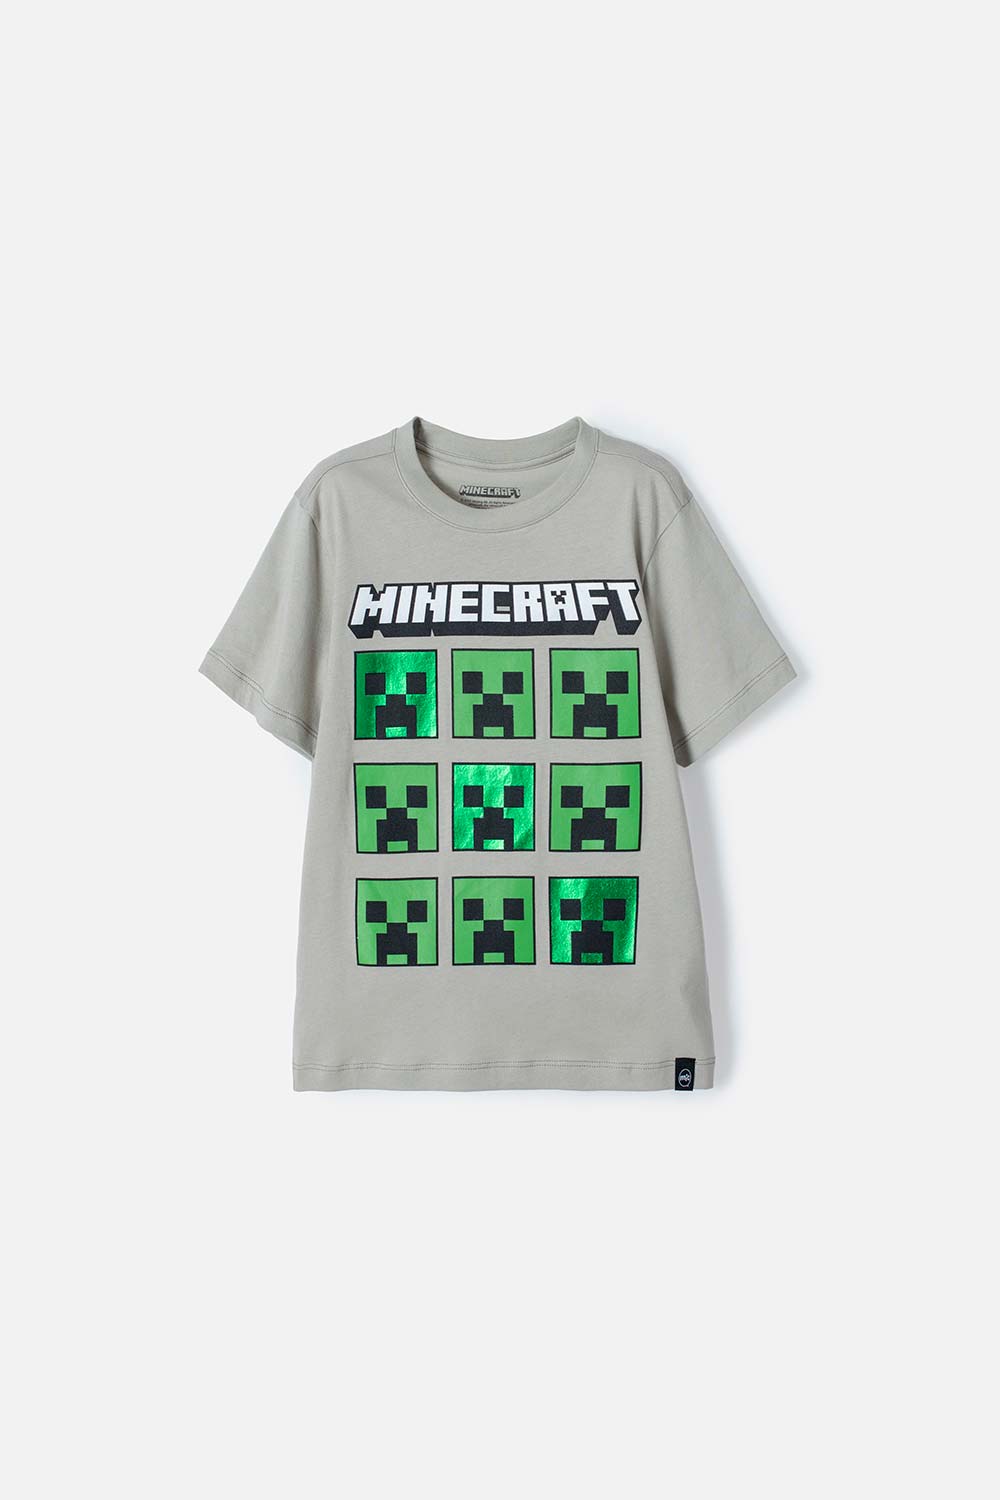 Camiseta de Minecraft verde manga corta para niño 6-0